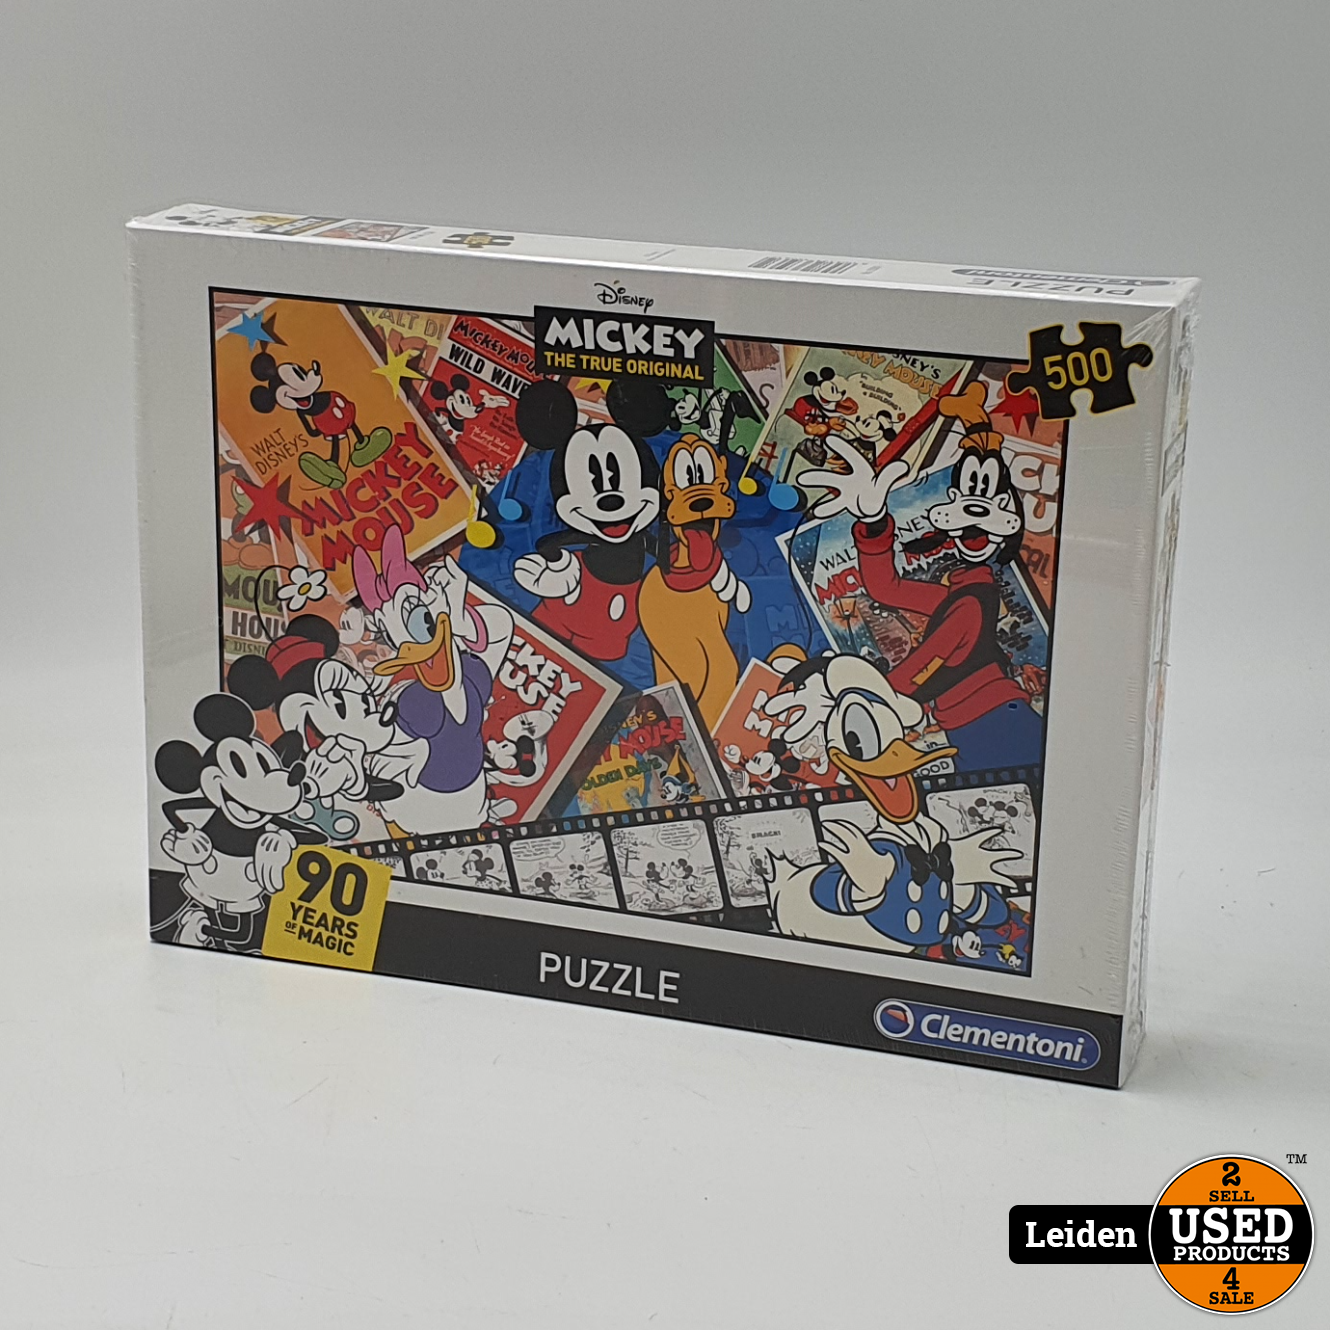 Accumulatie Th Noodlottig Puzzel Mickey Mouse 90 jaar - 500 stukjes - Clementoni - Used Products  Leiden